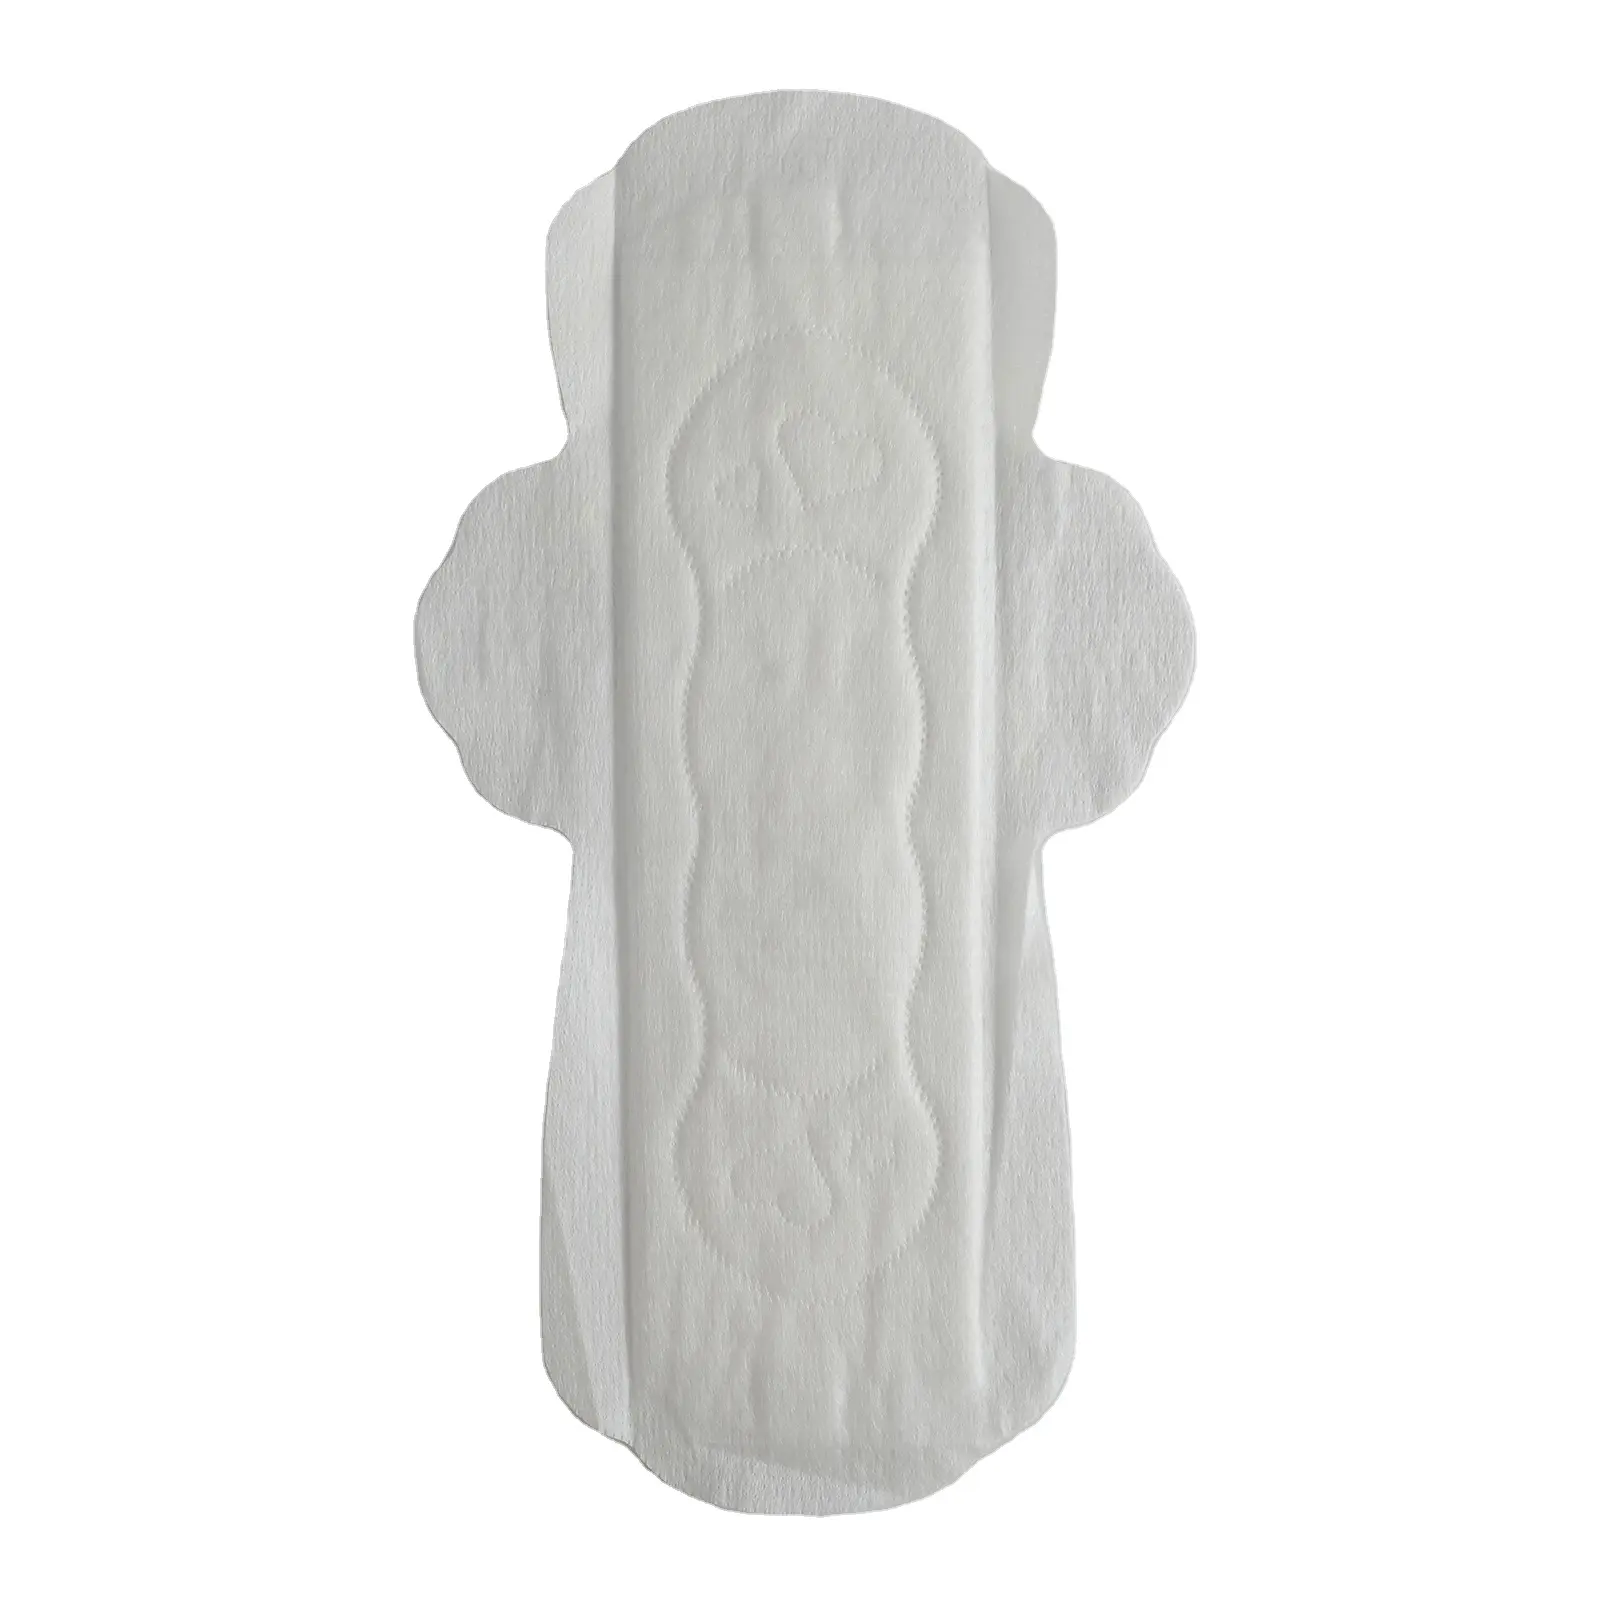 Soft Care Breathable Cotton Lady Girl Women Feminine Hygiene Sanitary Pad Napkin